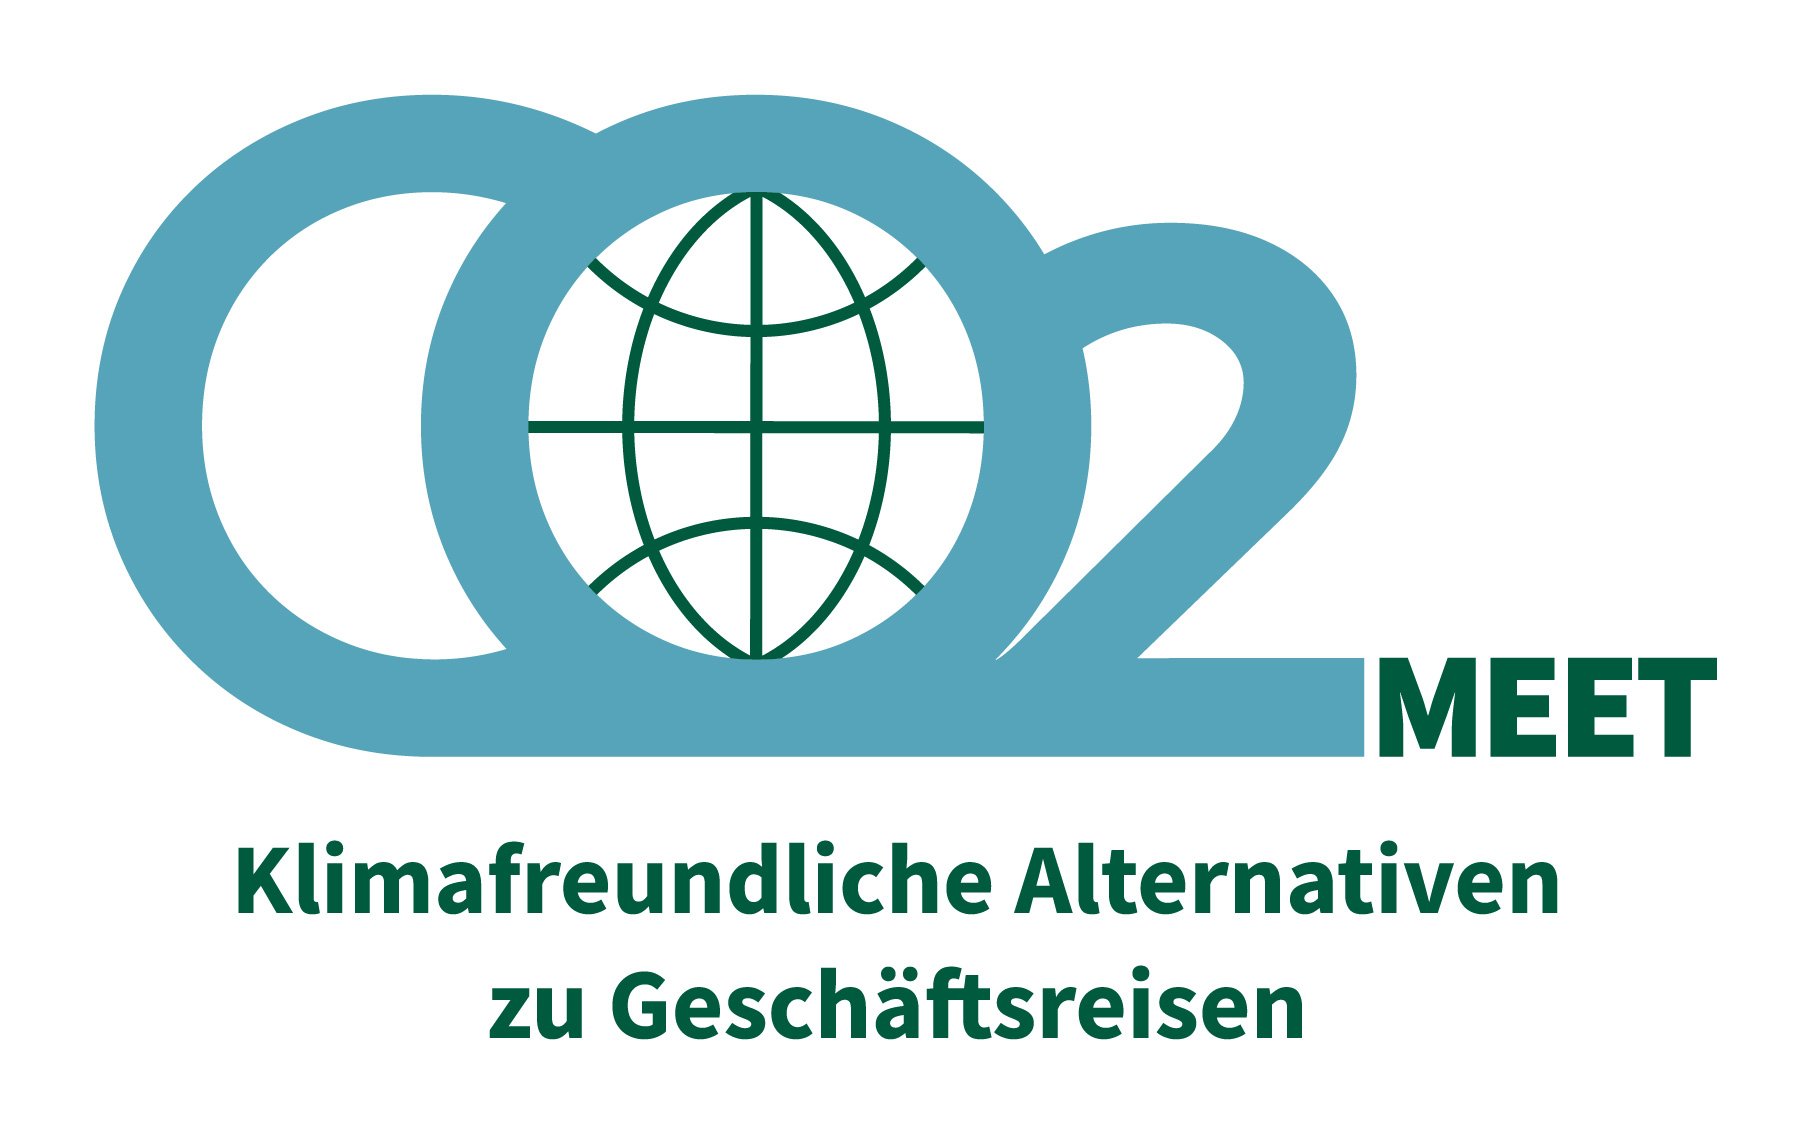 Das Logo des Projekts CO2meet